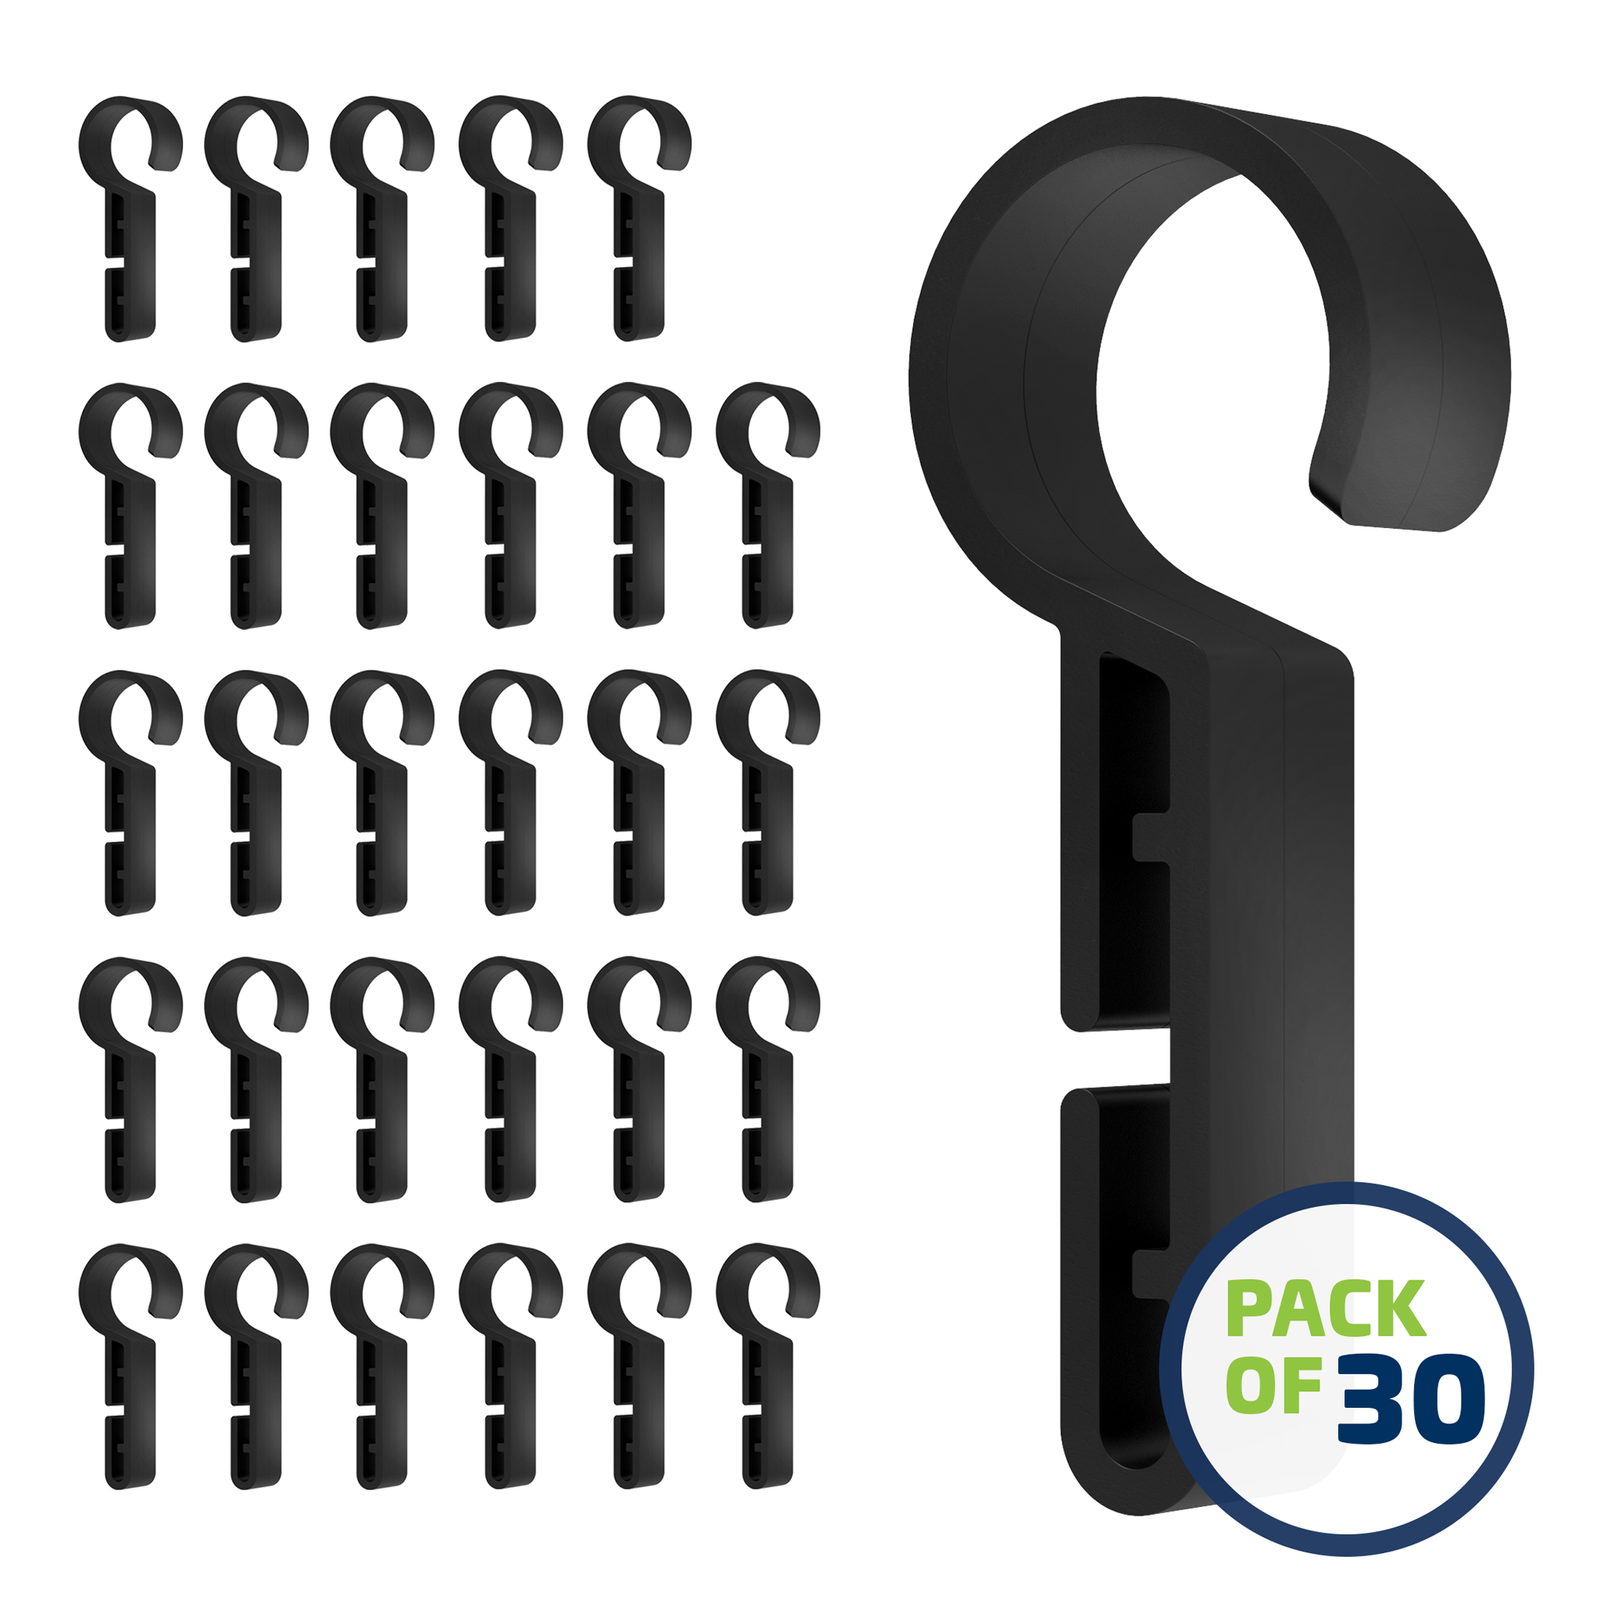 bundle of 30 hard hat headlamp clips in black